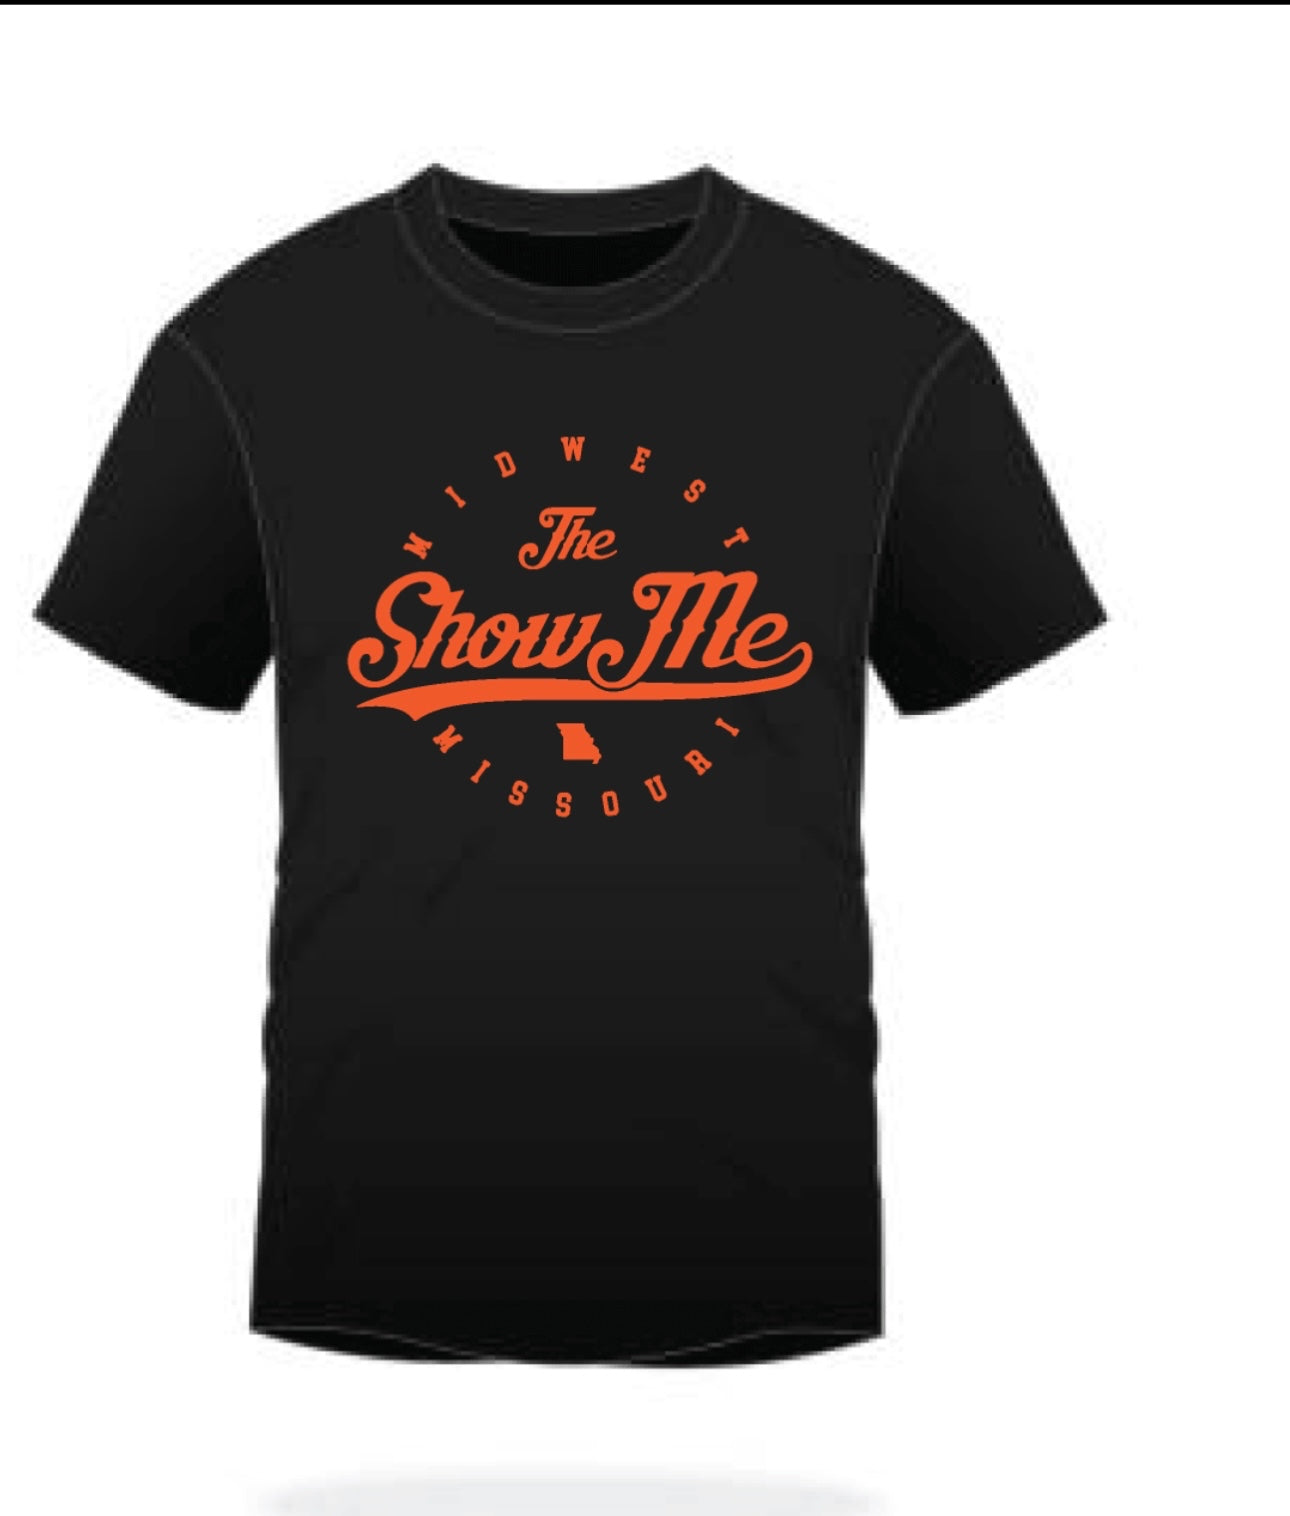 Black and Orange(Glow) Heavyweight Graphic T-shirt